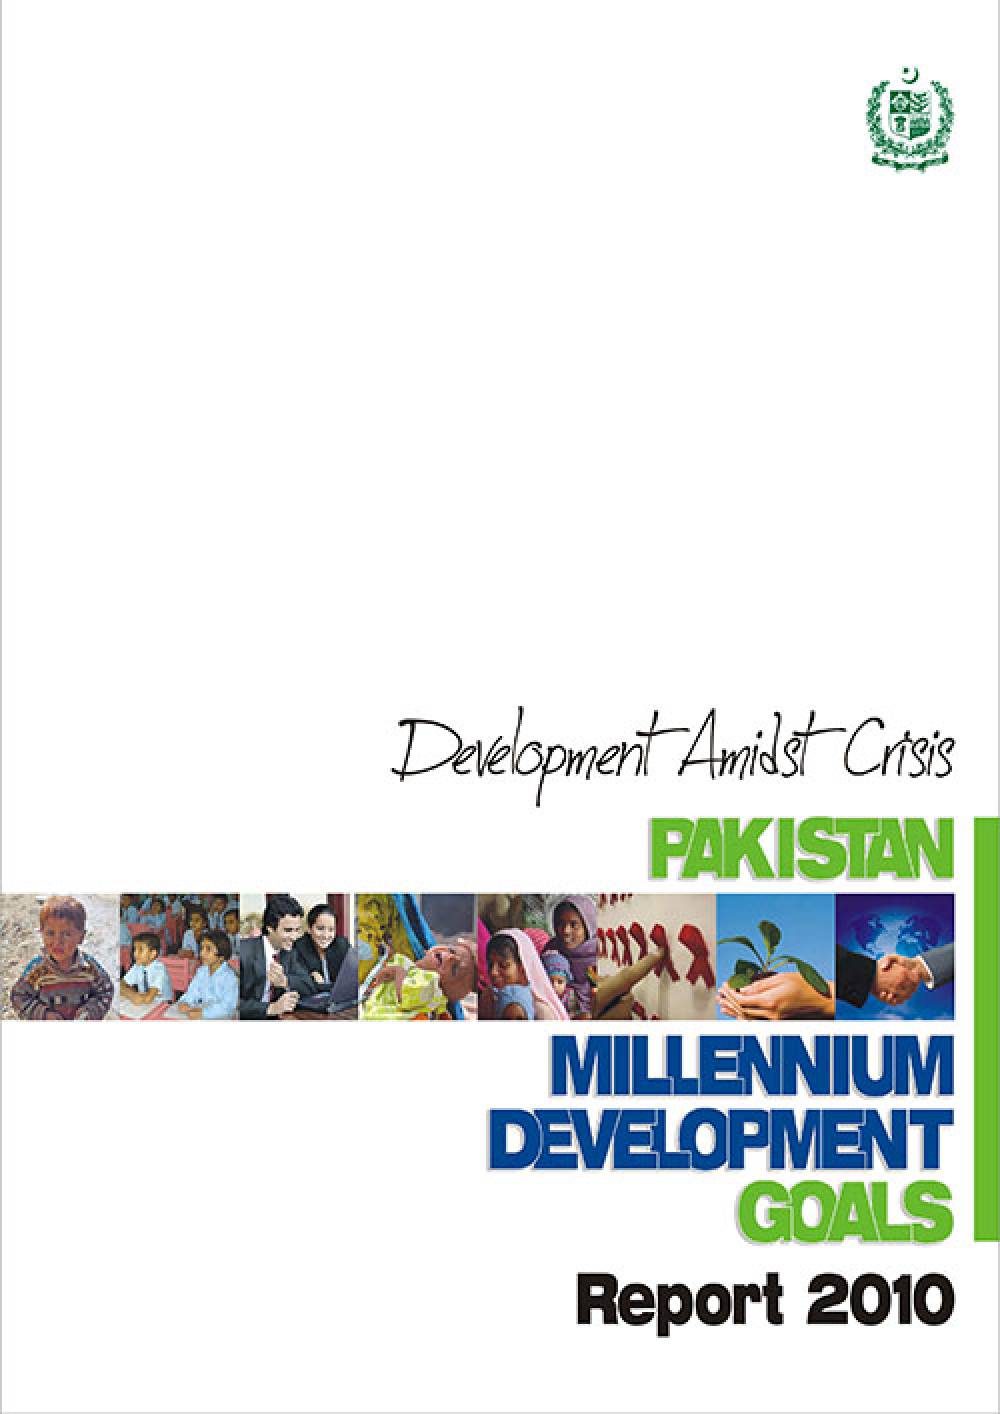 Development Admids Crisis-Pakistan Millennium Development Goals 2010